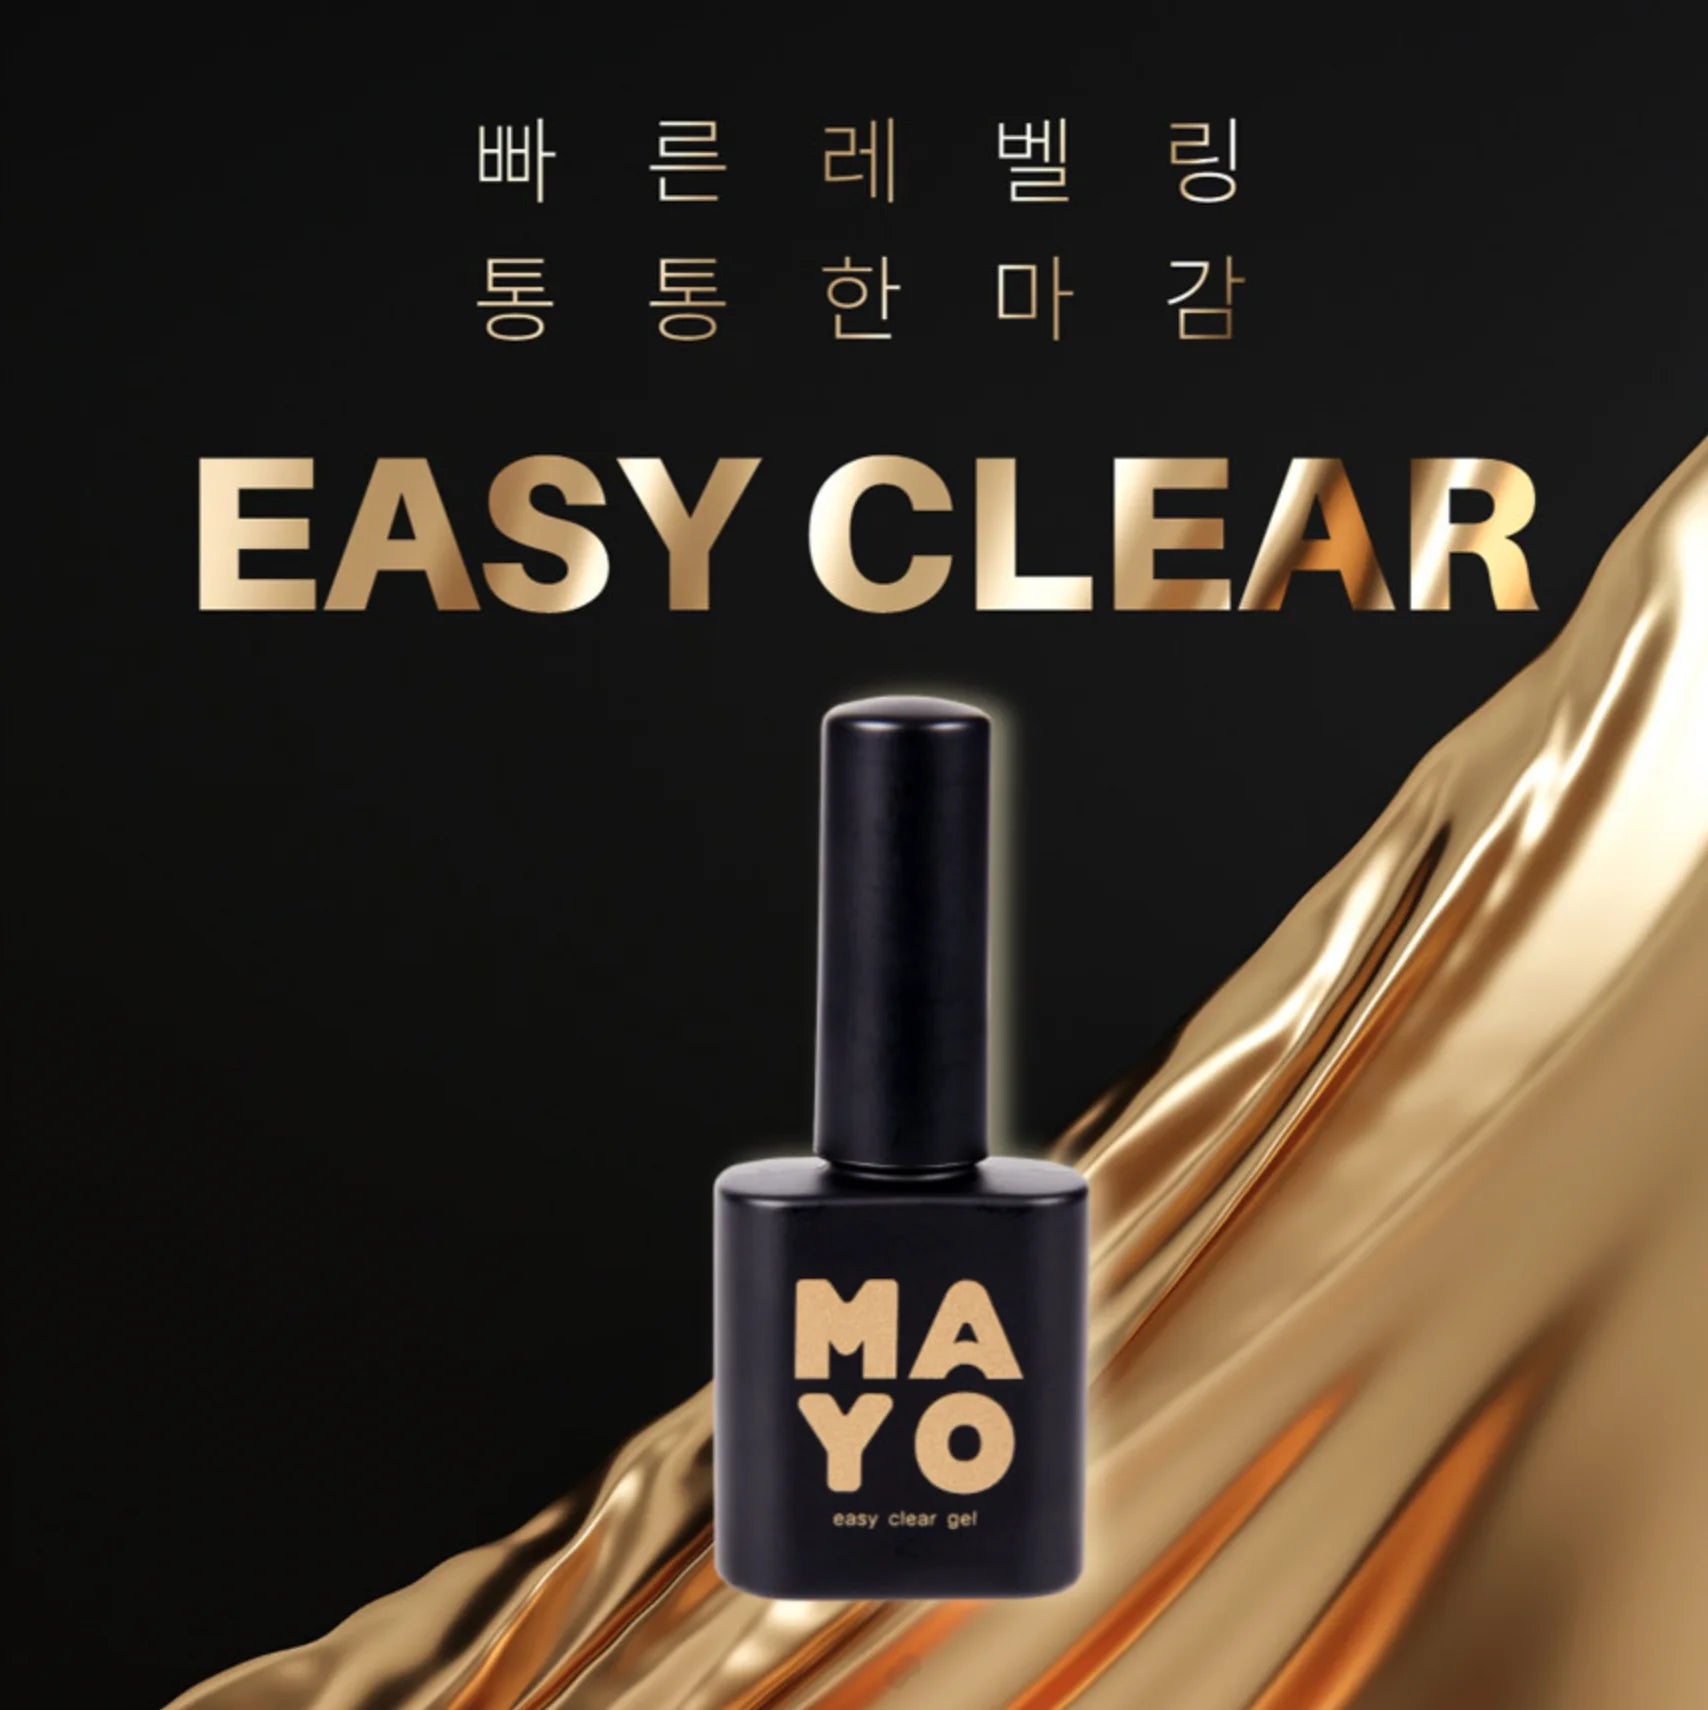 MAYO - Easy Clear Gel (Overlay)